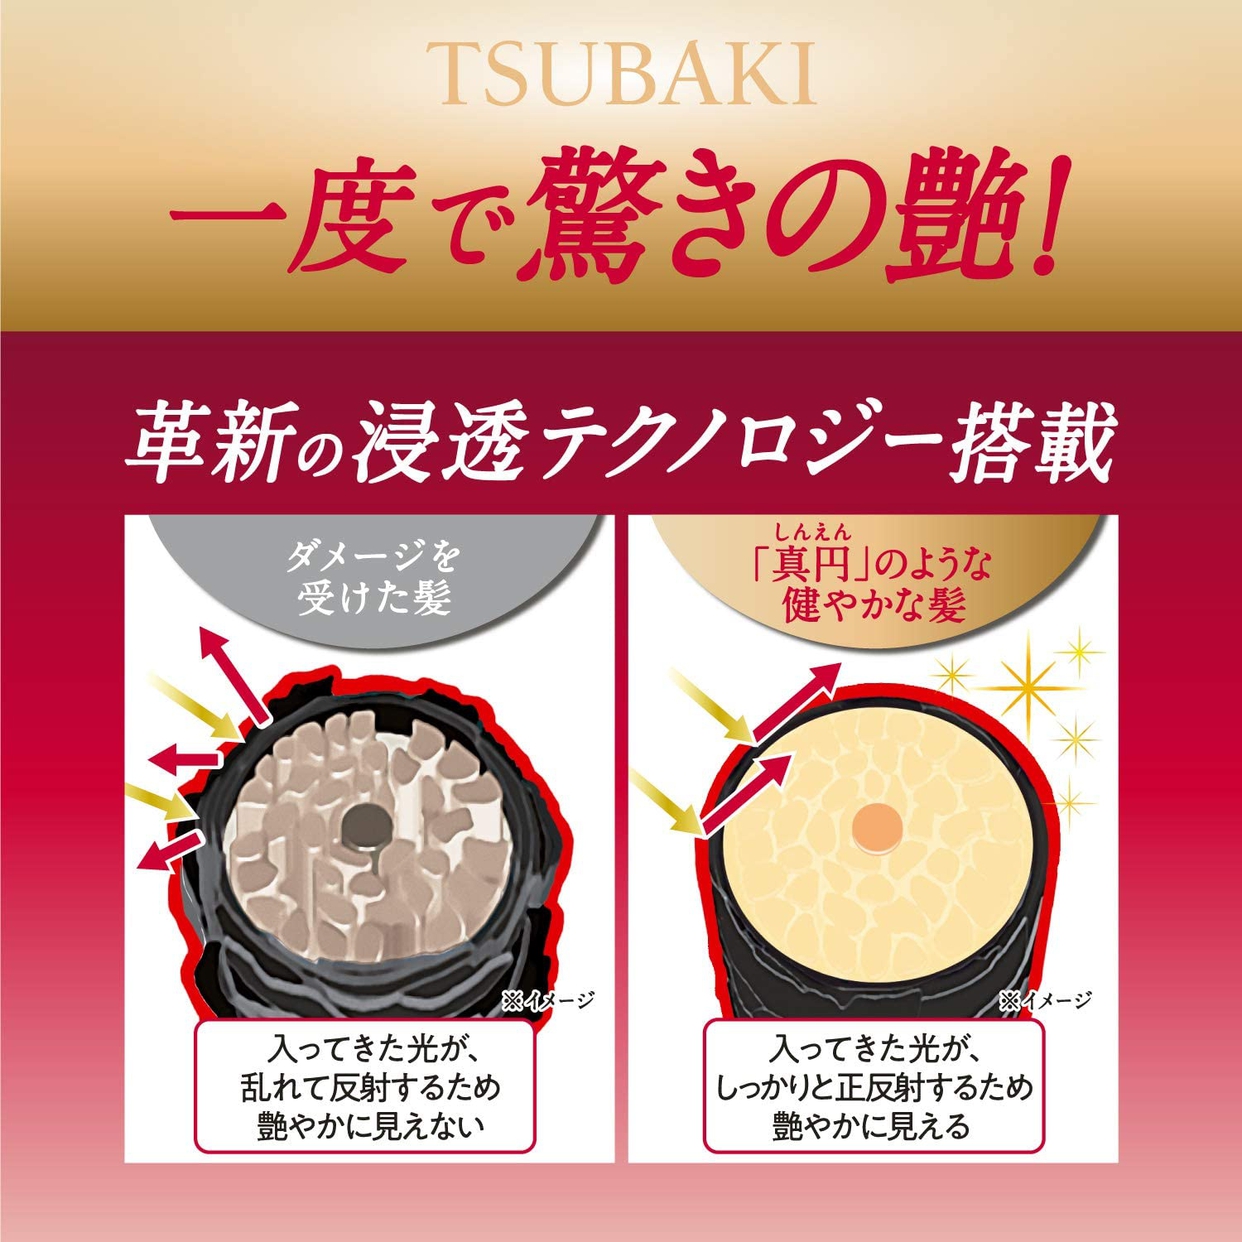 TSUBAKI(ツバキ) プレミアムモイスト ヘアコンディショナーの商品画像4 